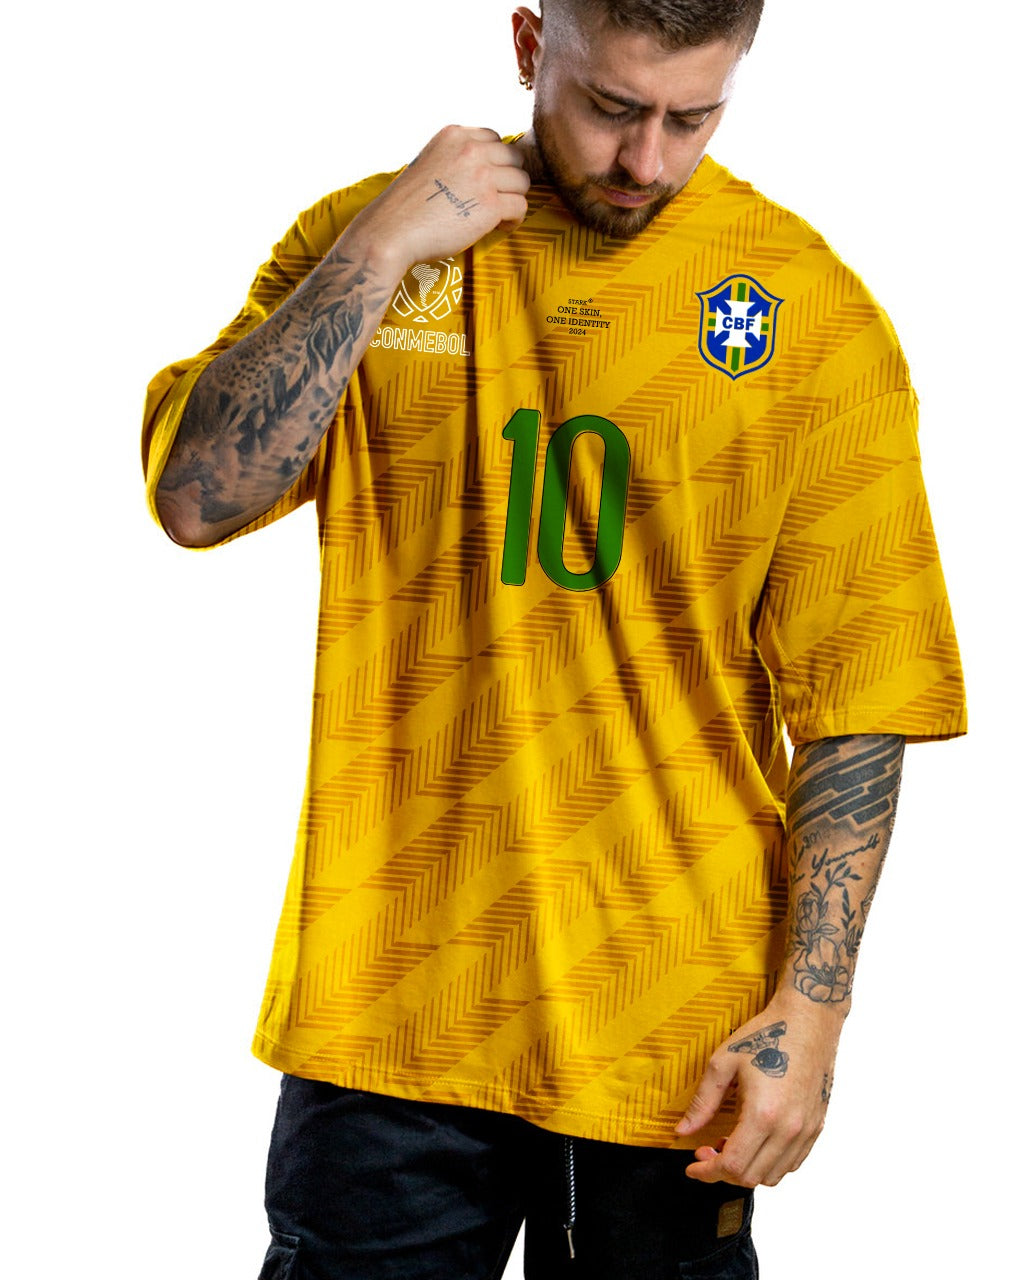 Oversize Brasil Ronaldinho